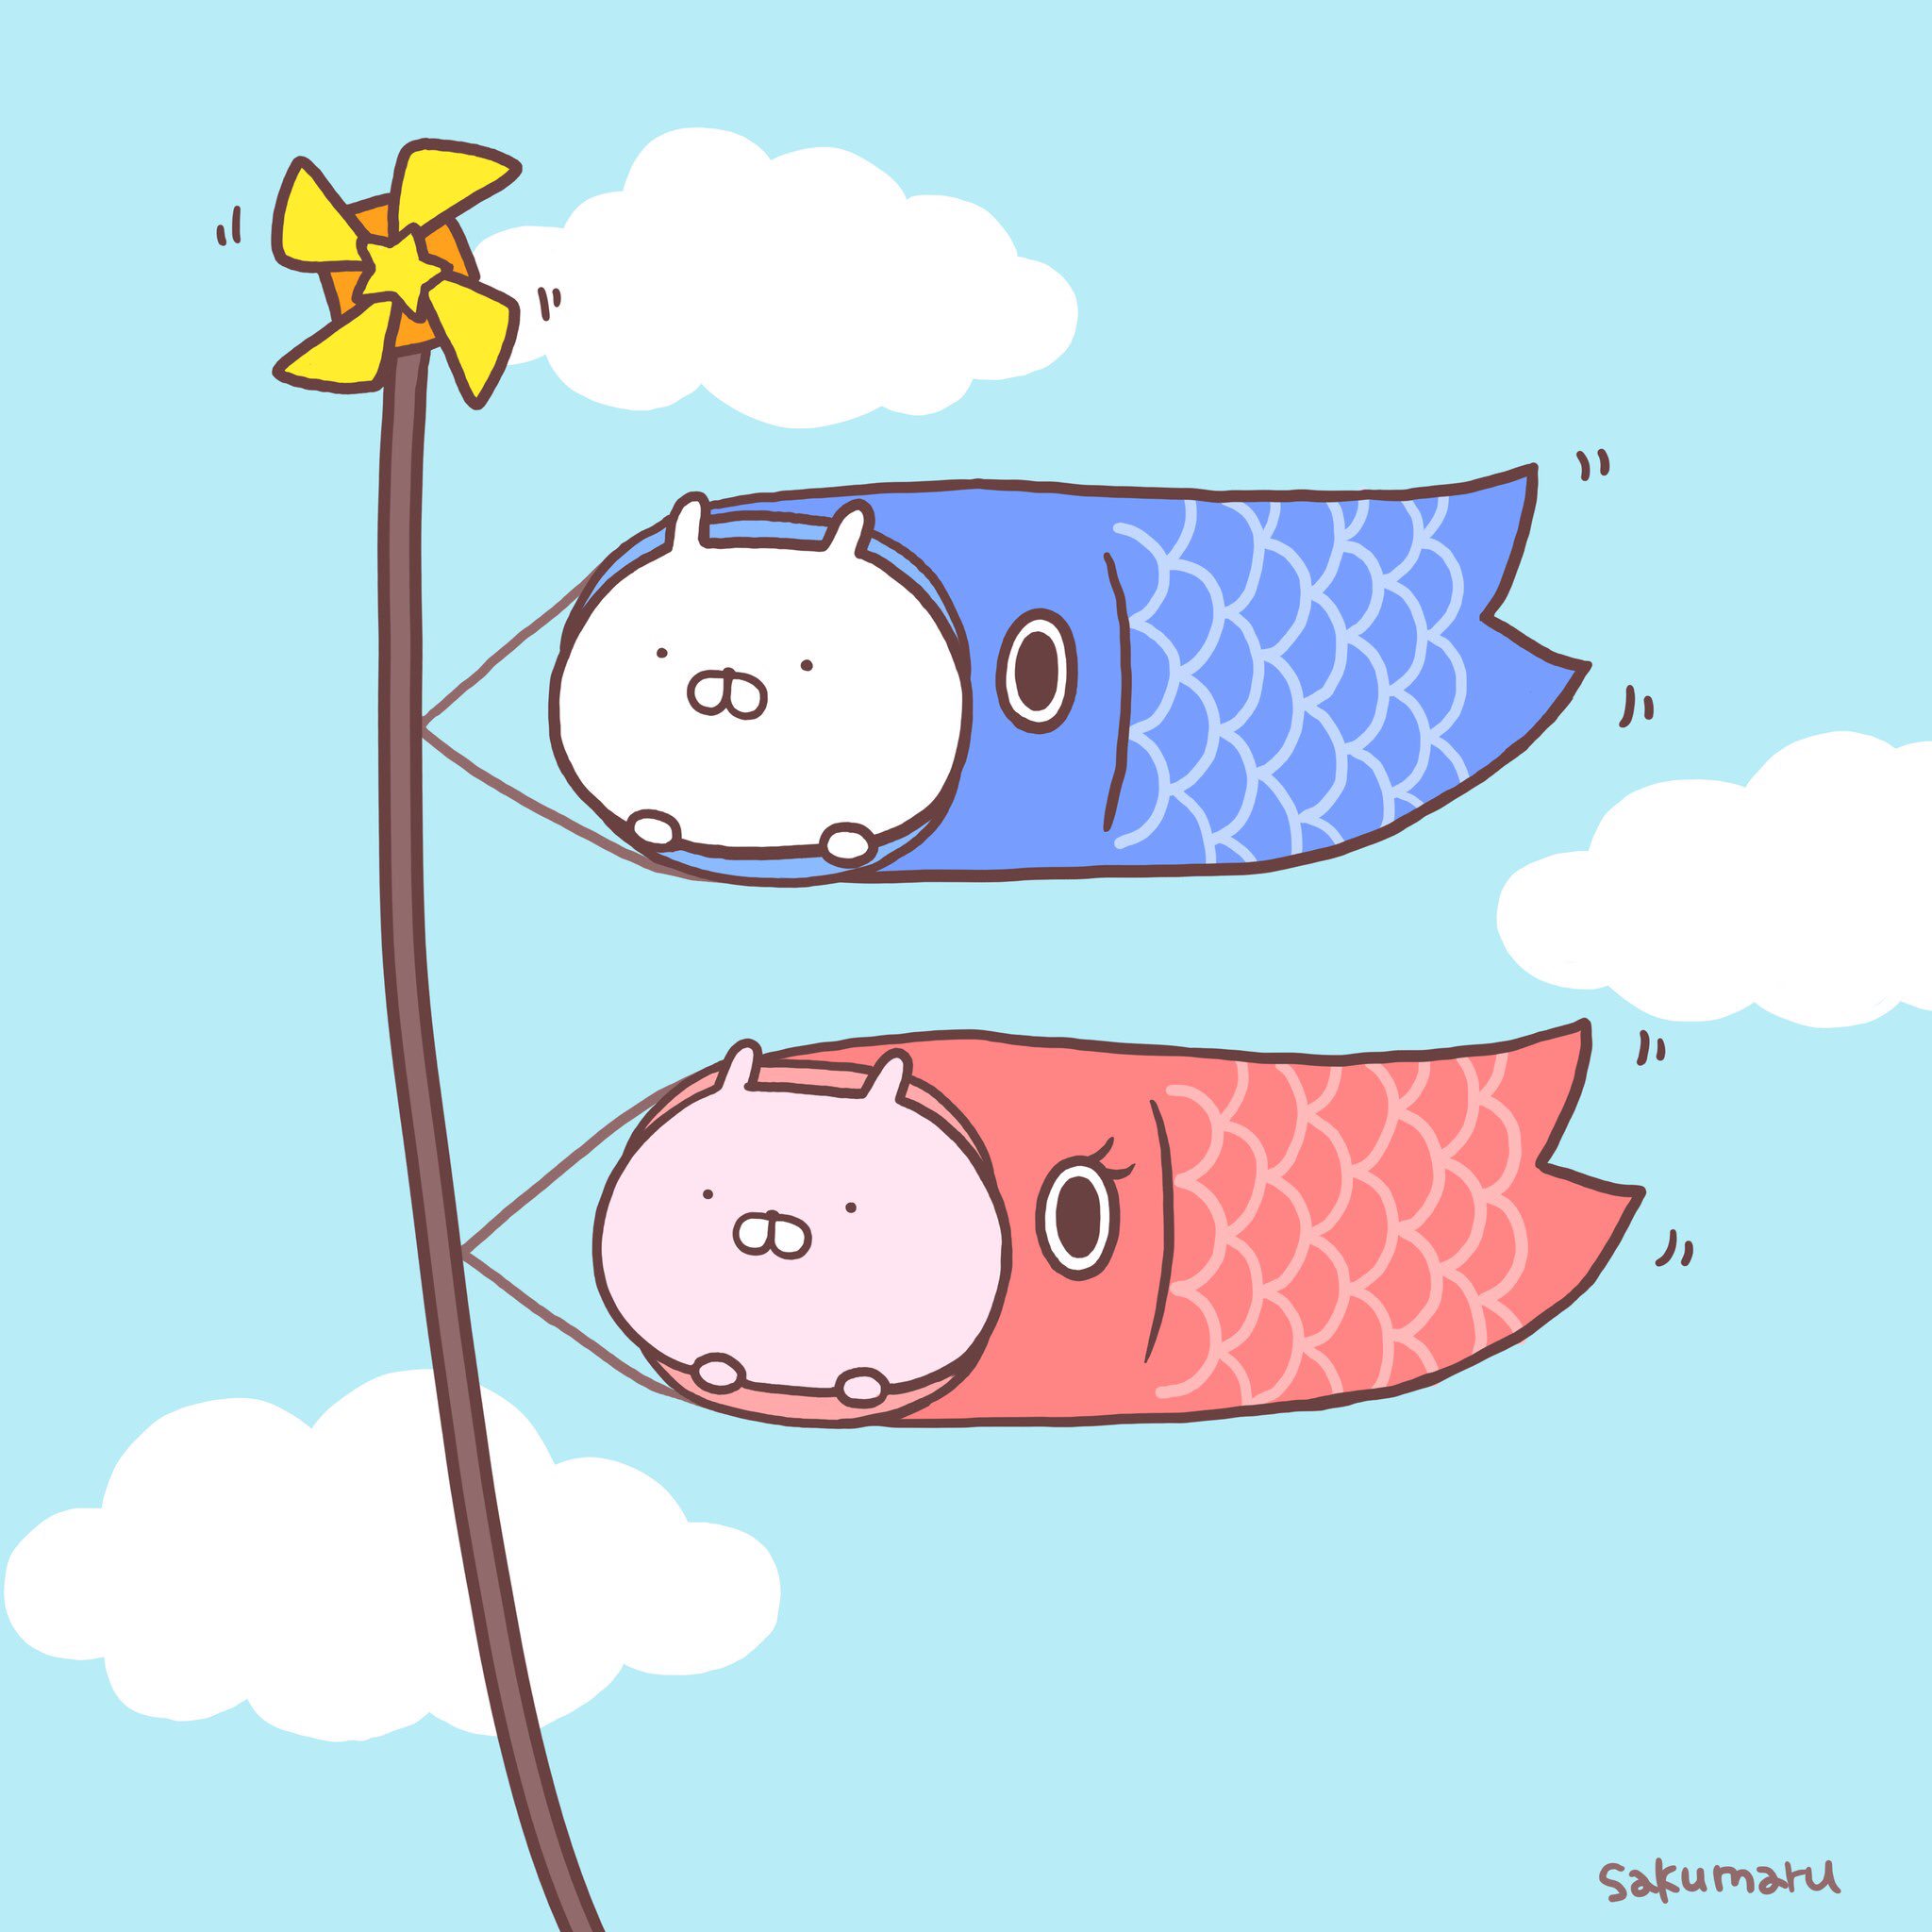 Sakumaru まいにちうさまる 鯉のぼり こどもの日 うさまる T Co Ulkwr3of3b Twitter